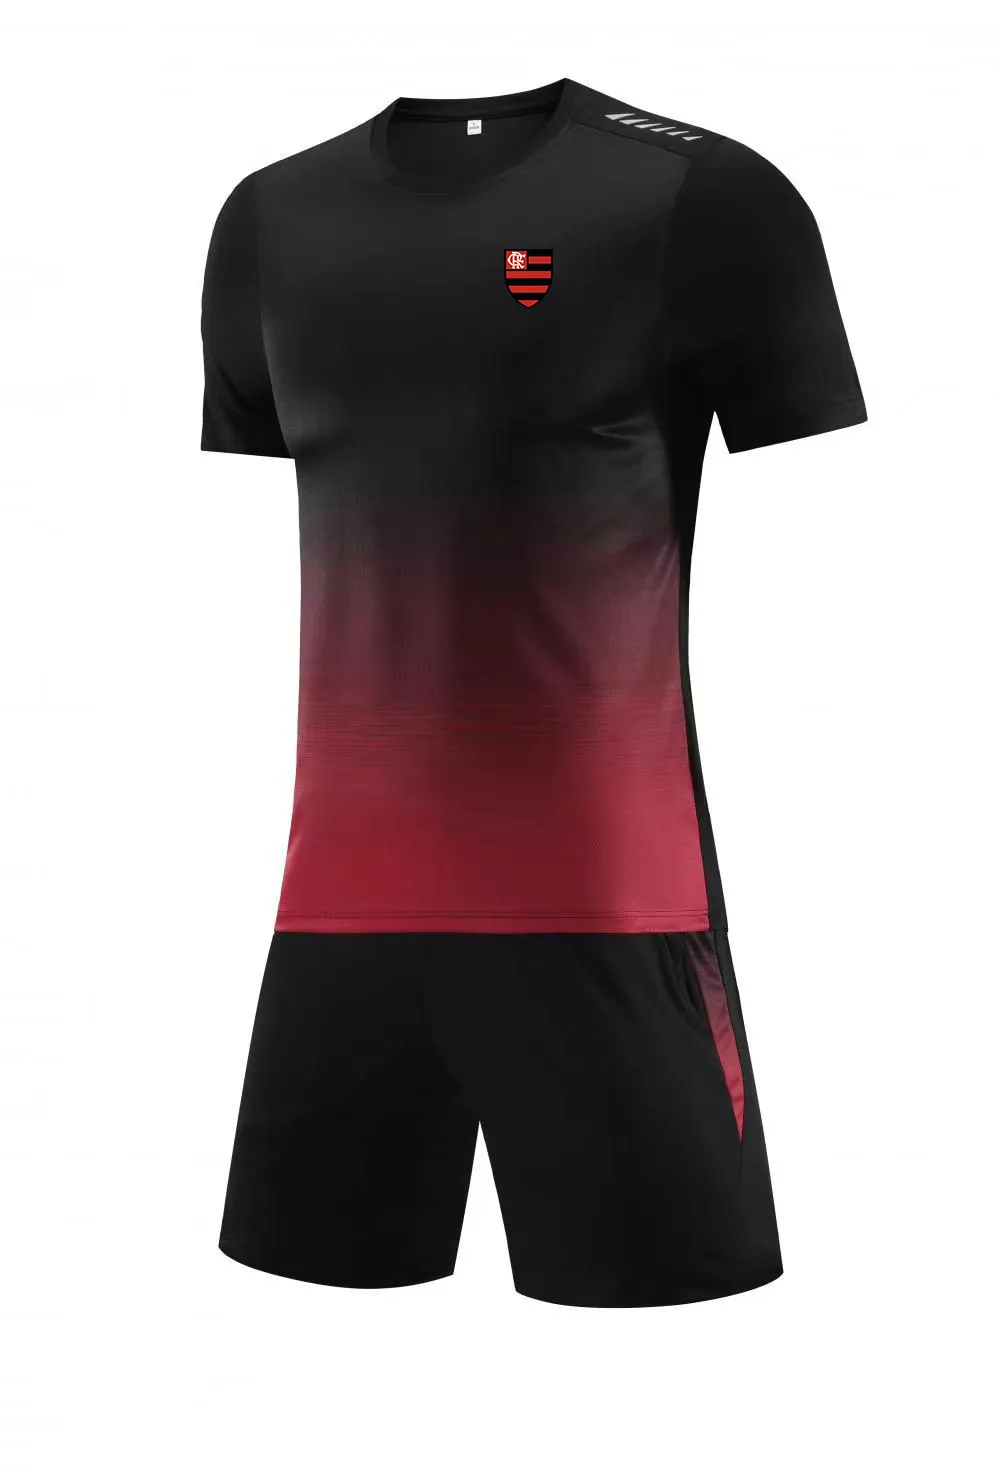 Clube de Regatas do Flamengo Men's Tracksuits Summer Leisure Short Sleeve Sport Training Suit Outdoor Leisure Jogging T-shirt Leisure Sport Kort ärmskjorta